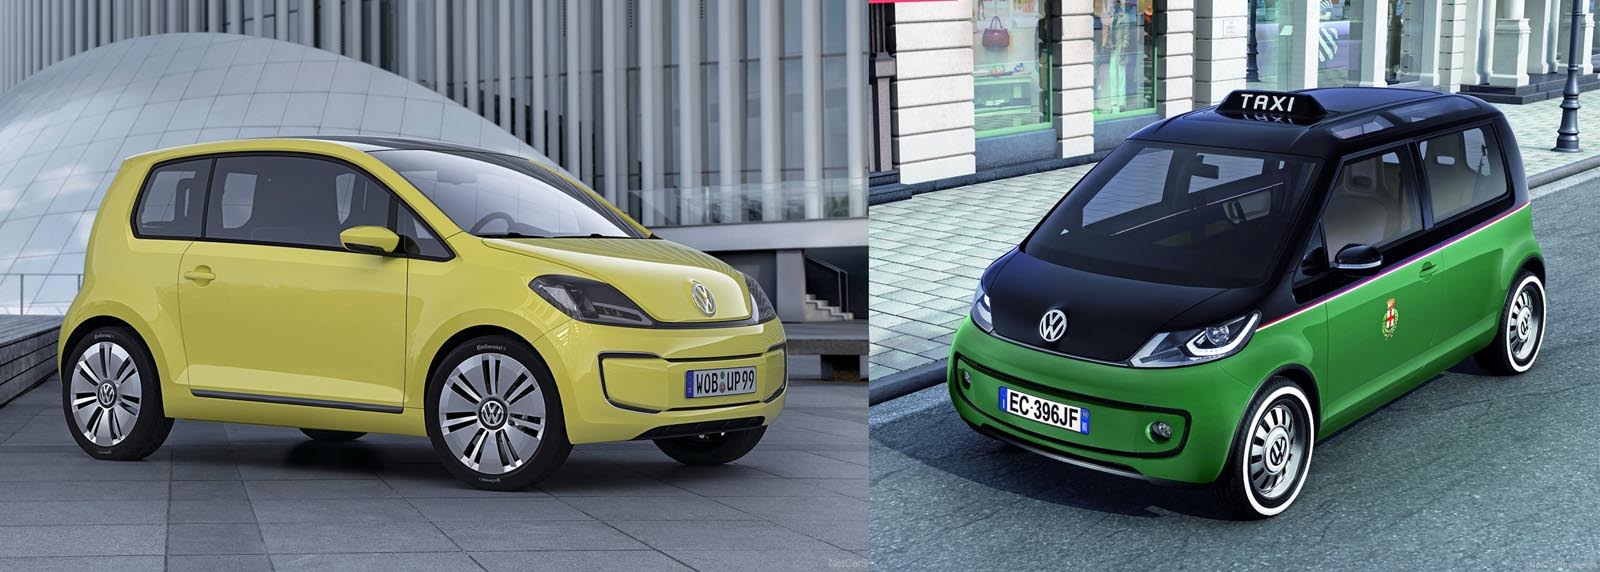 In 2012 va fi lansata o noua familie de modele mini, bazata pe conceptele VW Up